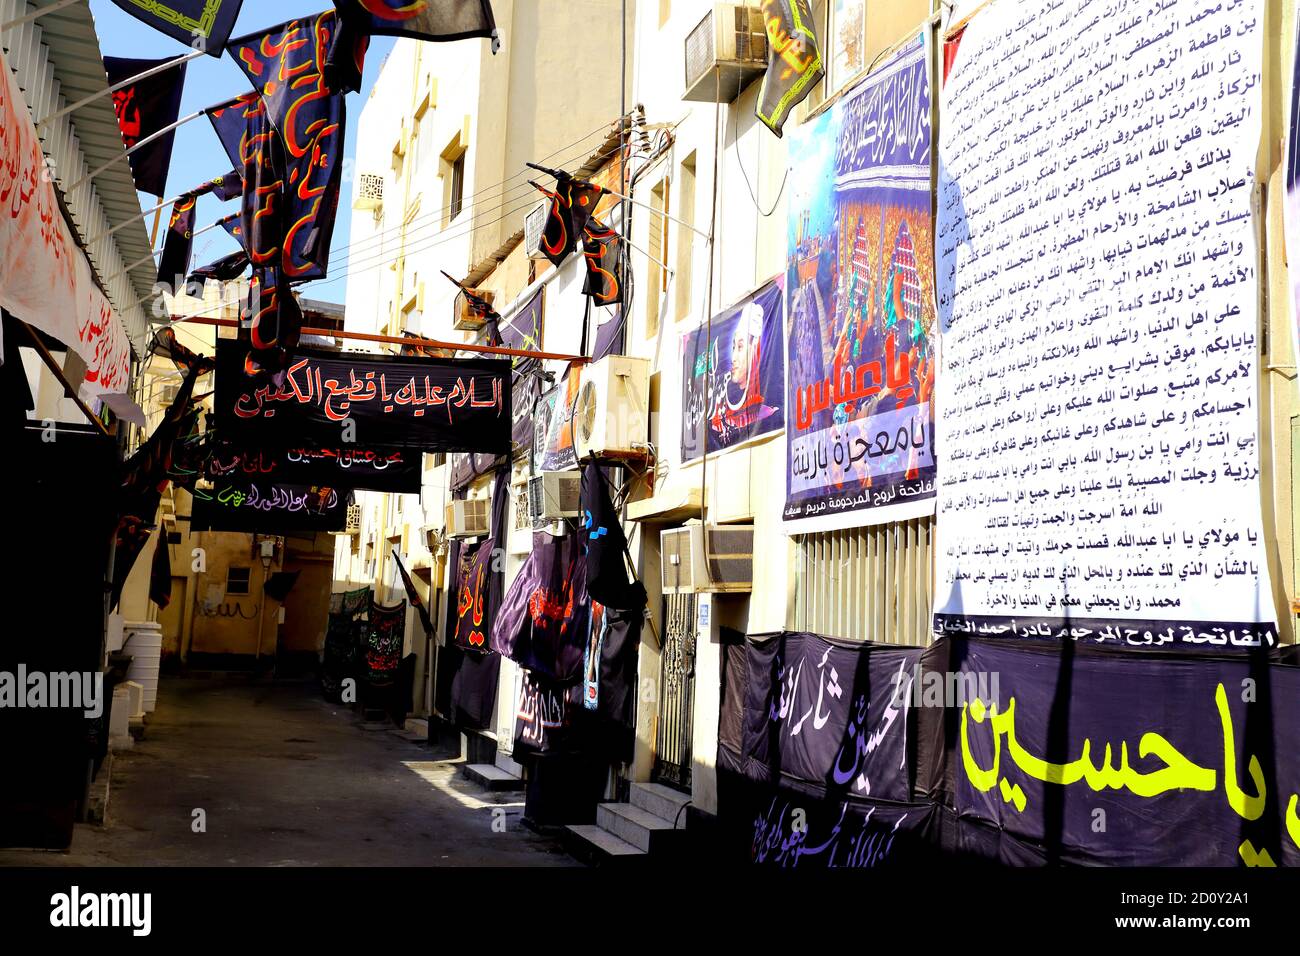 Religious Shia texts, banners and flags, Manama souk, Kingdom of Bahrain Stock Photo